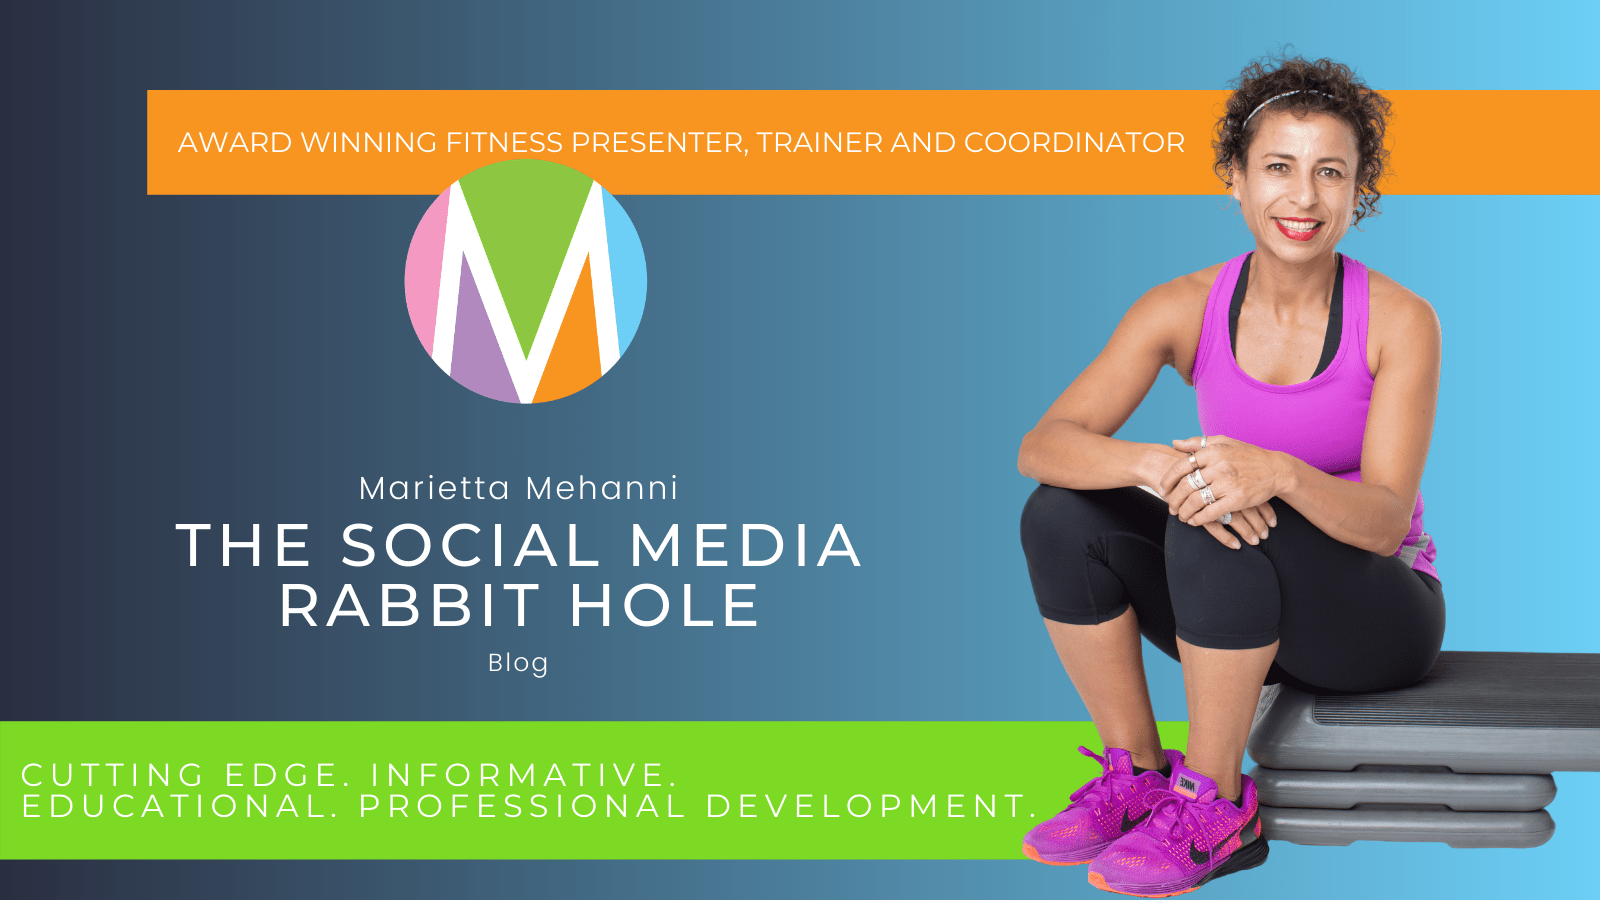 blog the social media rabbit hole marietta mehanni education professional development group fitness personal training informative fitness guru presenter